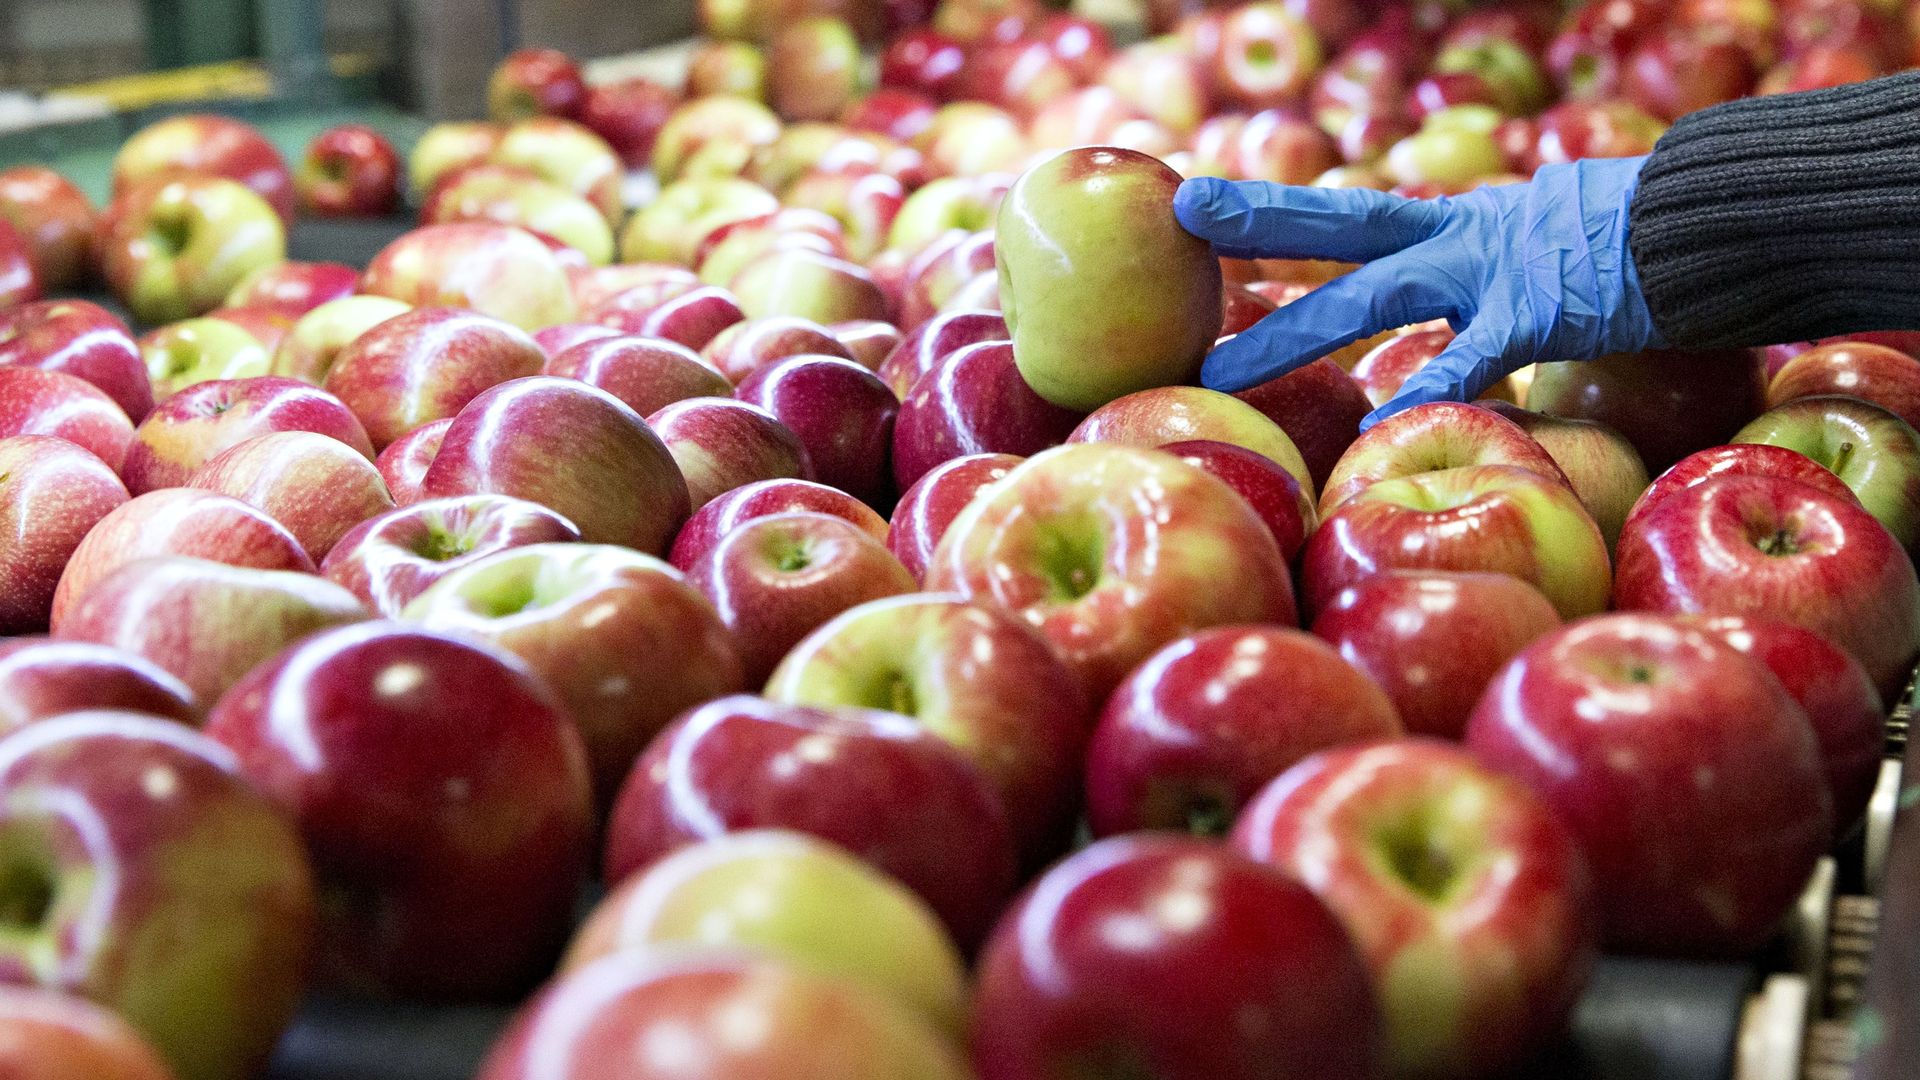 A hand picking apples on a conveyer belt 